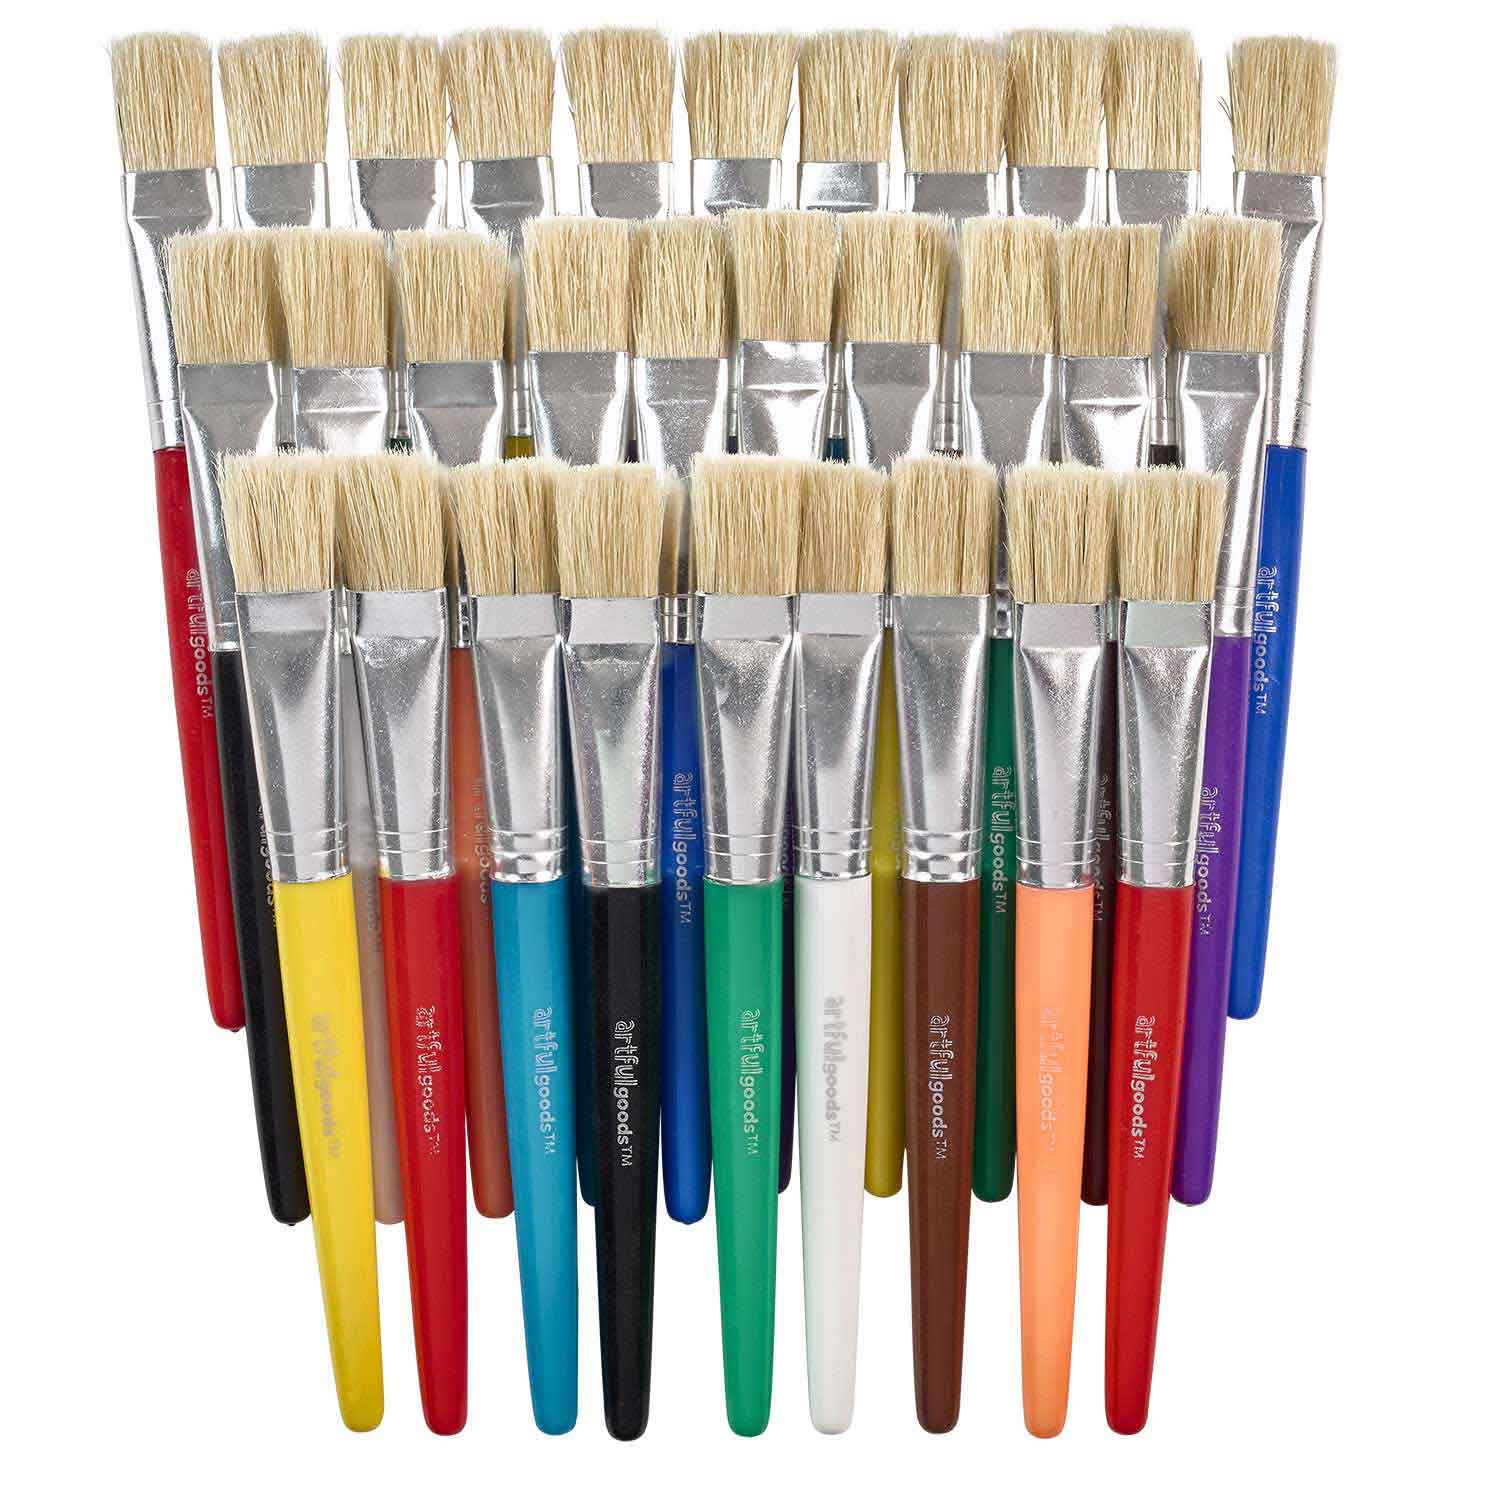 Paint Brushes For Kids, Children Paint Brushes Toddler Large